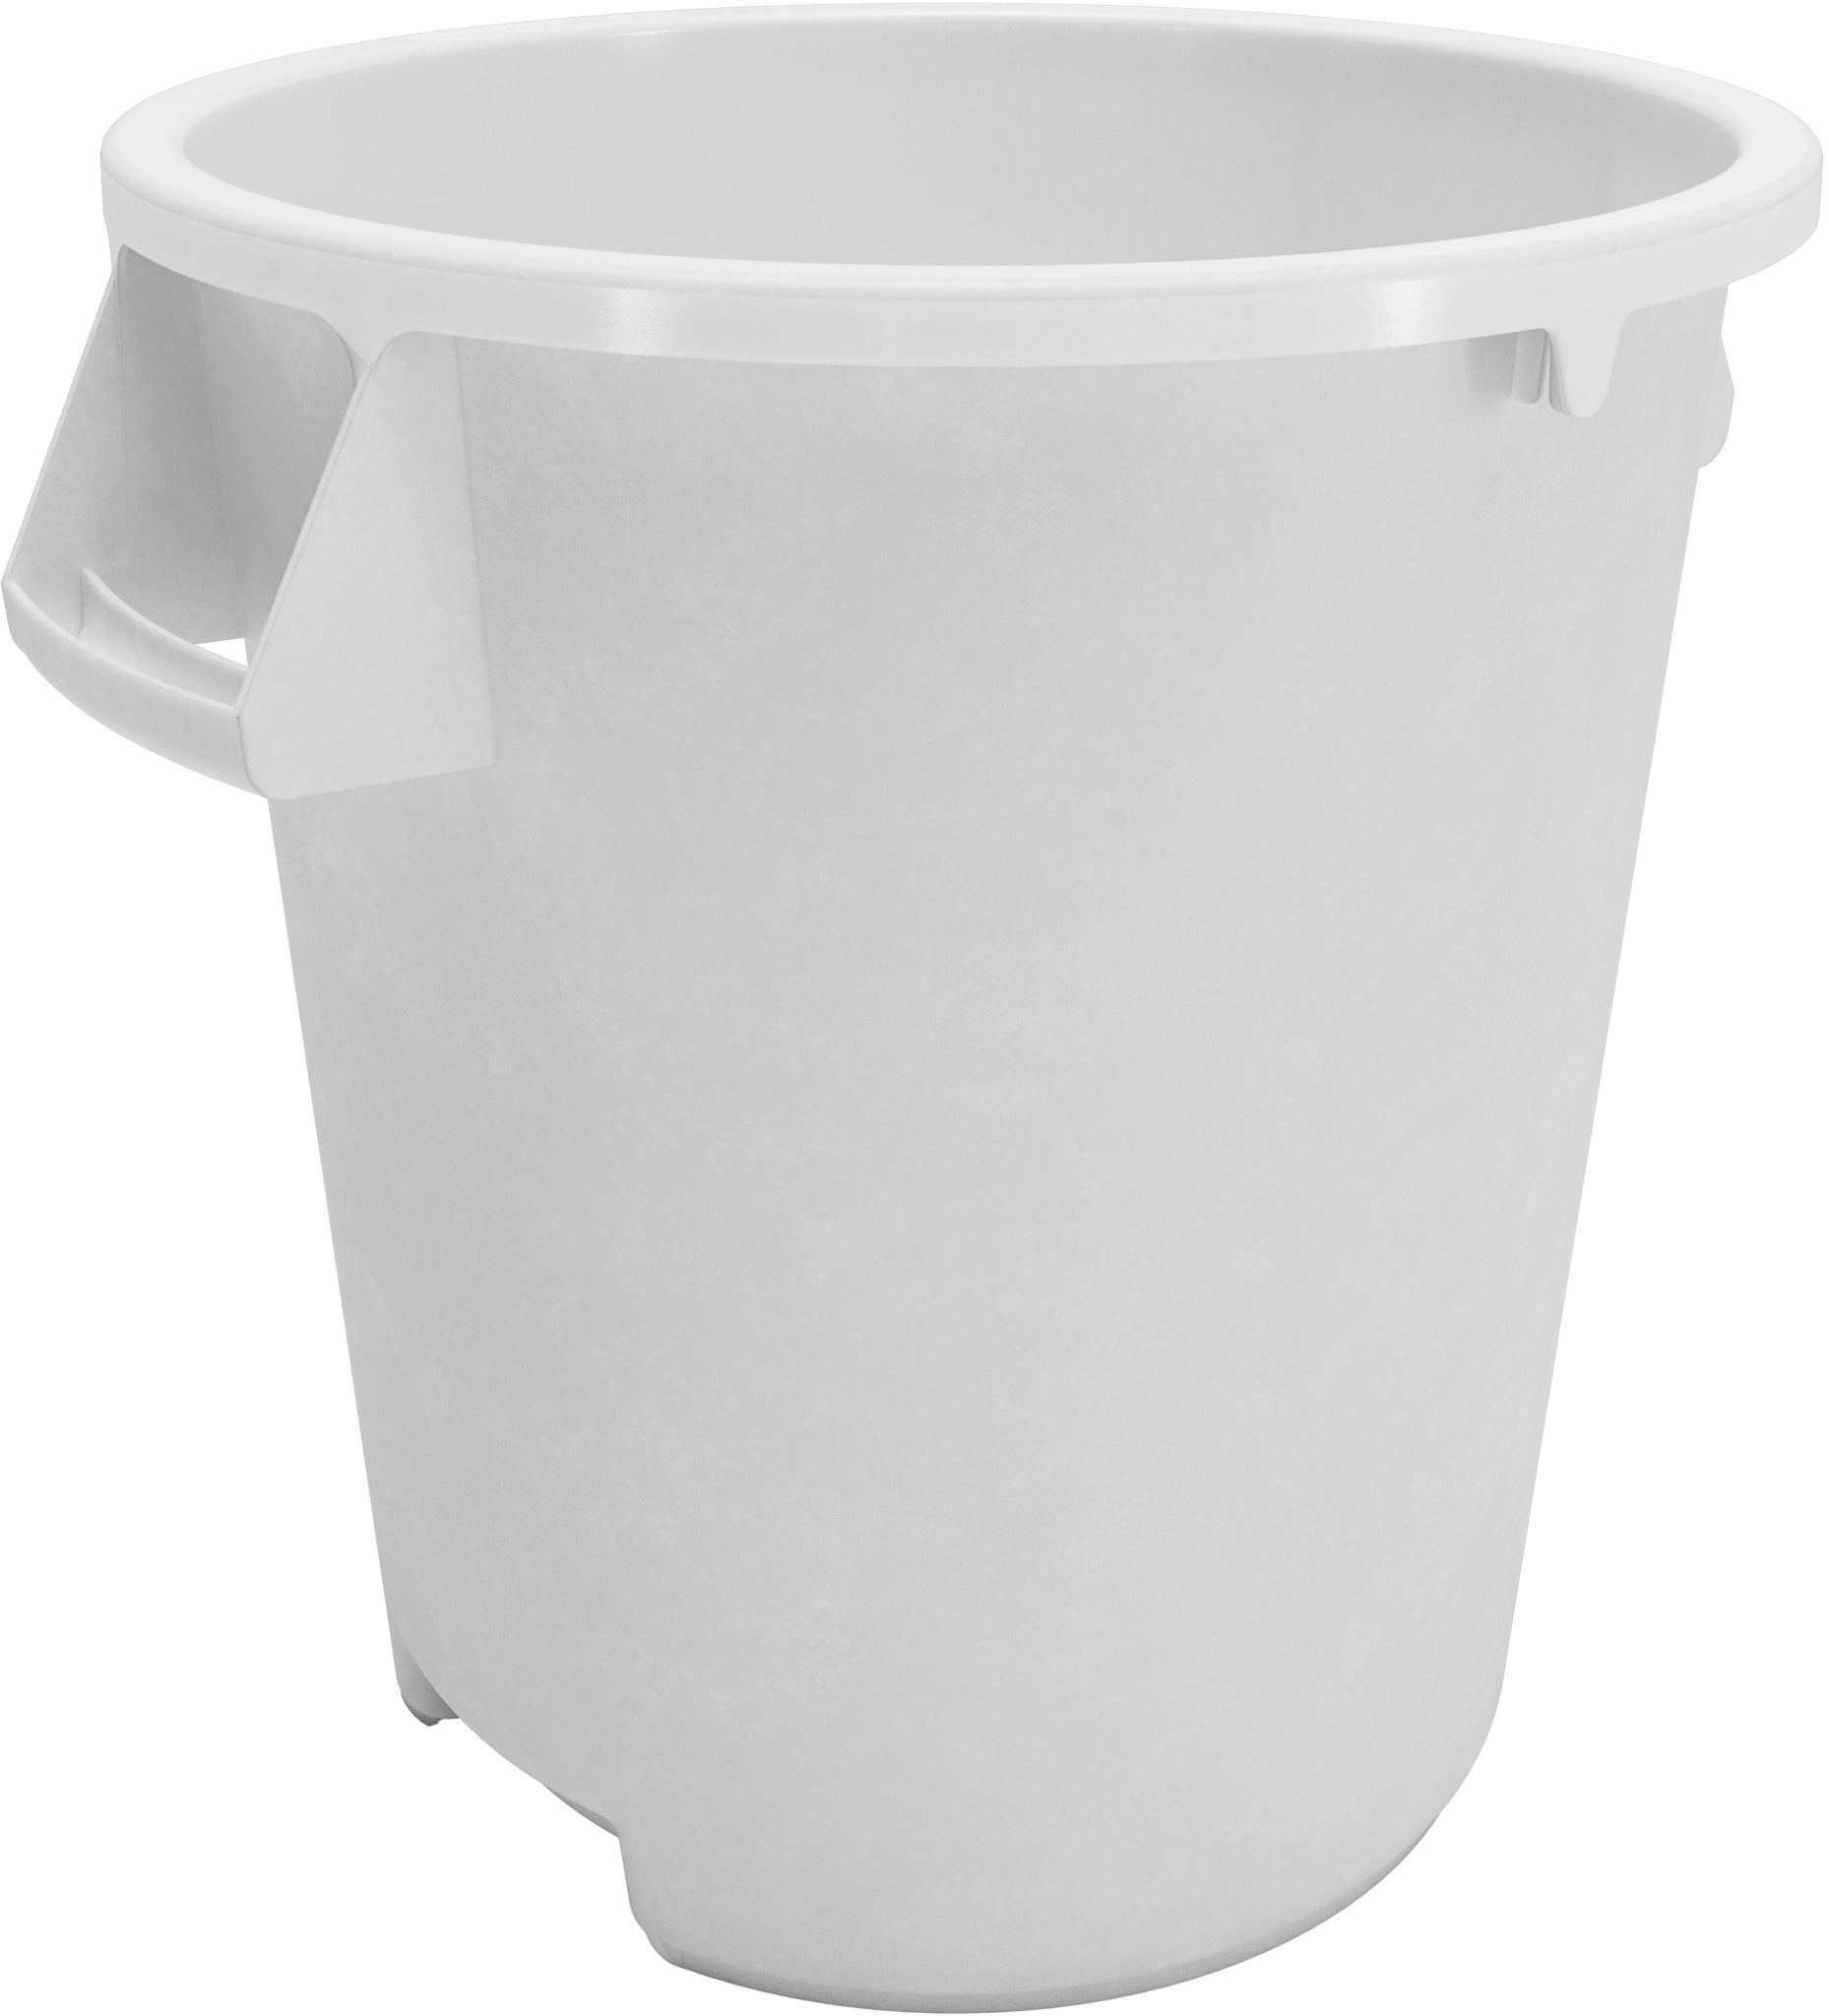 Carlisle 84101002 Bronco™ Plastic Waste Container - 10 Gallon Cap., White, NSF